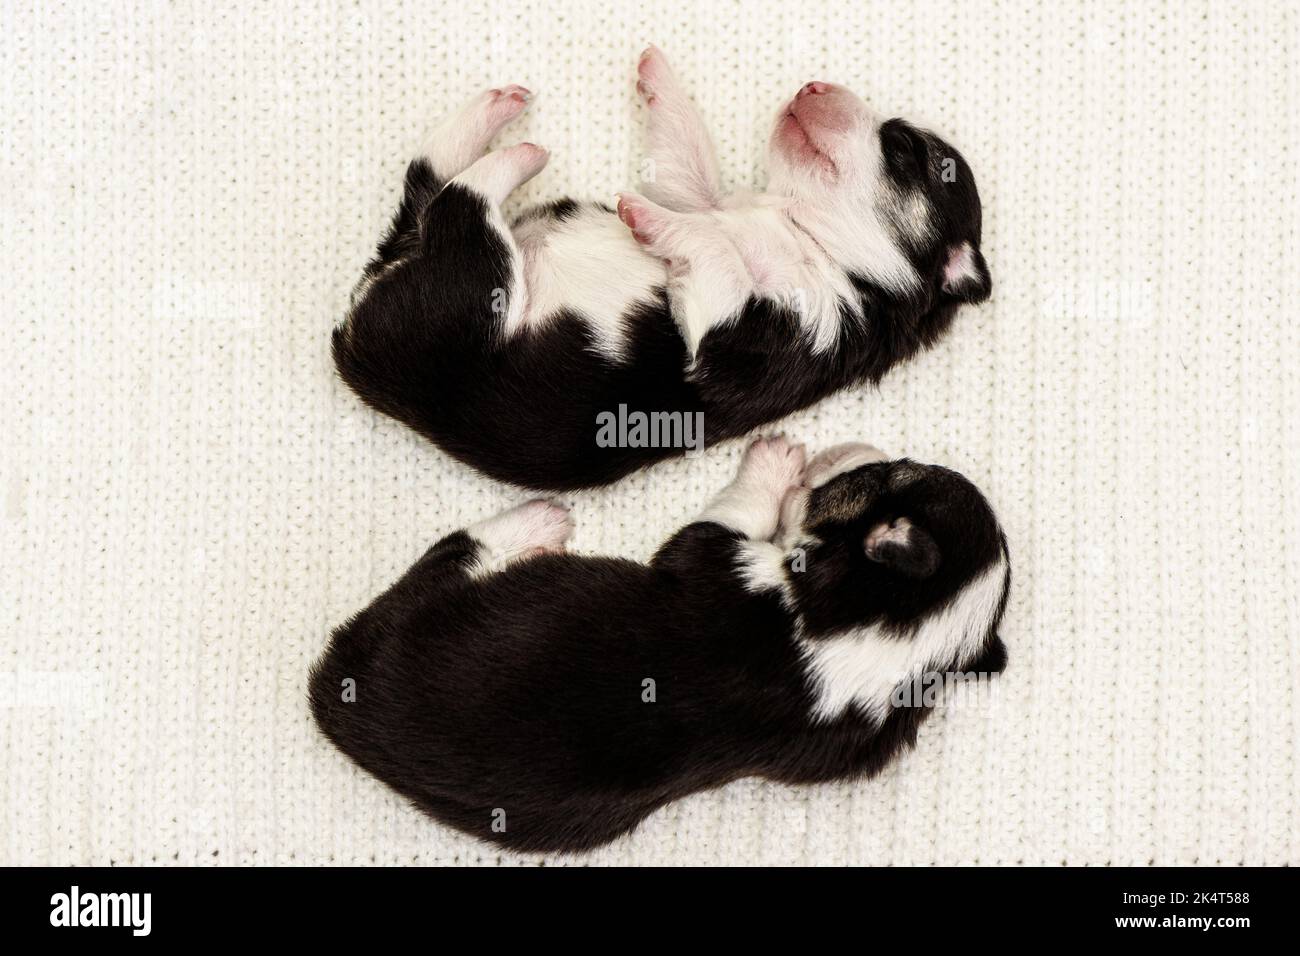 Cute Pembroke Welsh Corgi puppies enjoy sleeping on soft blanket Stock Photo